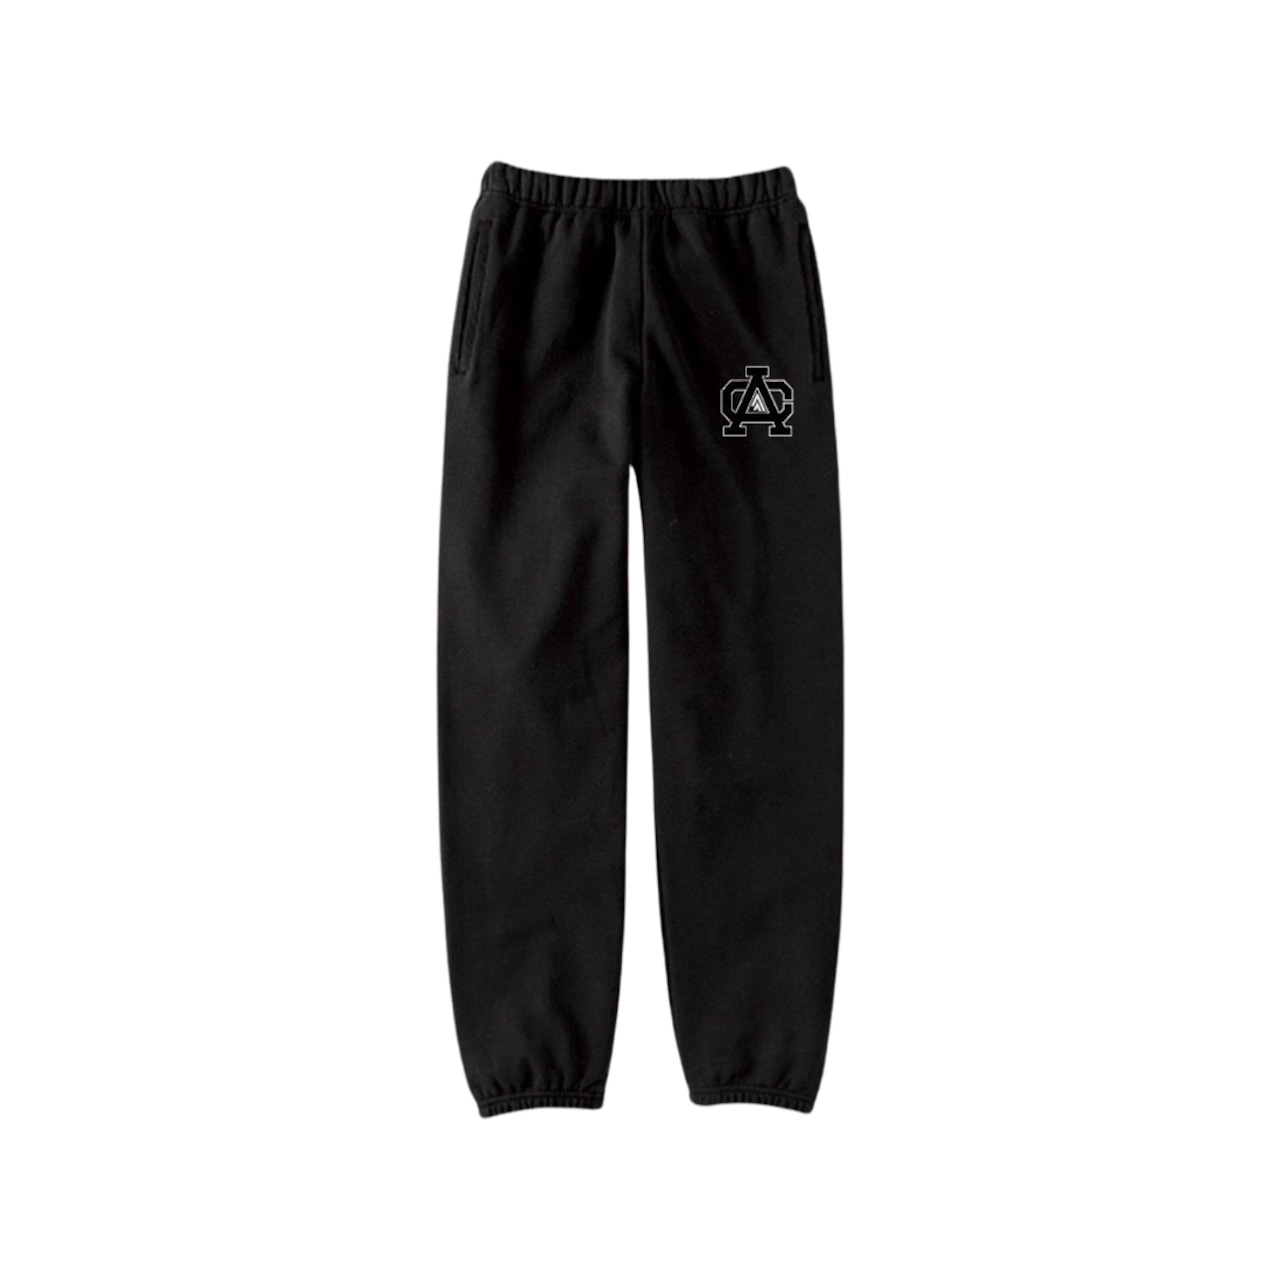 AO Logo Sweat Pants / black